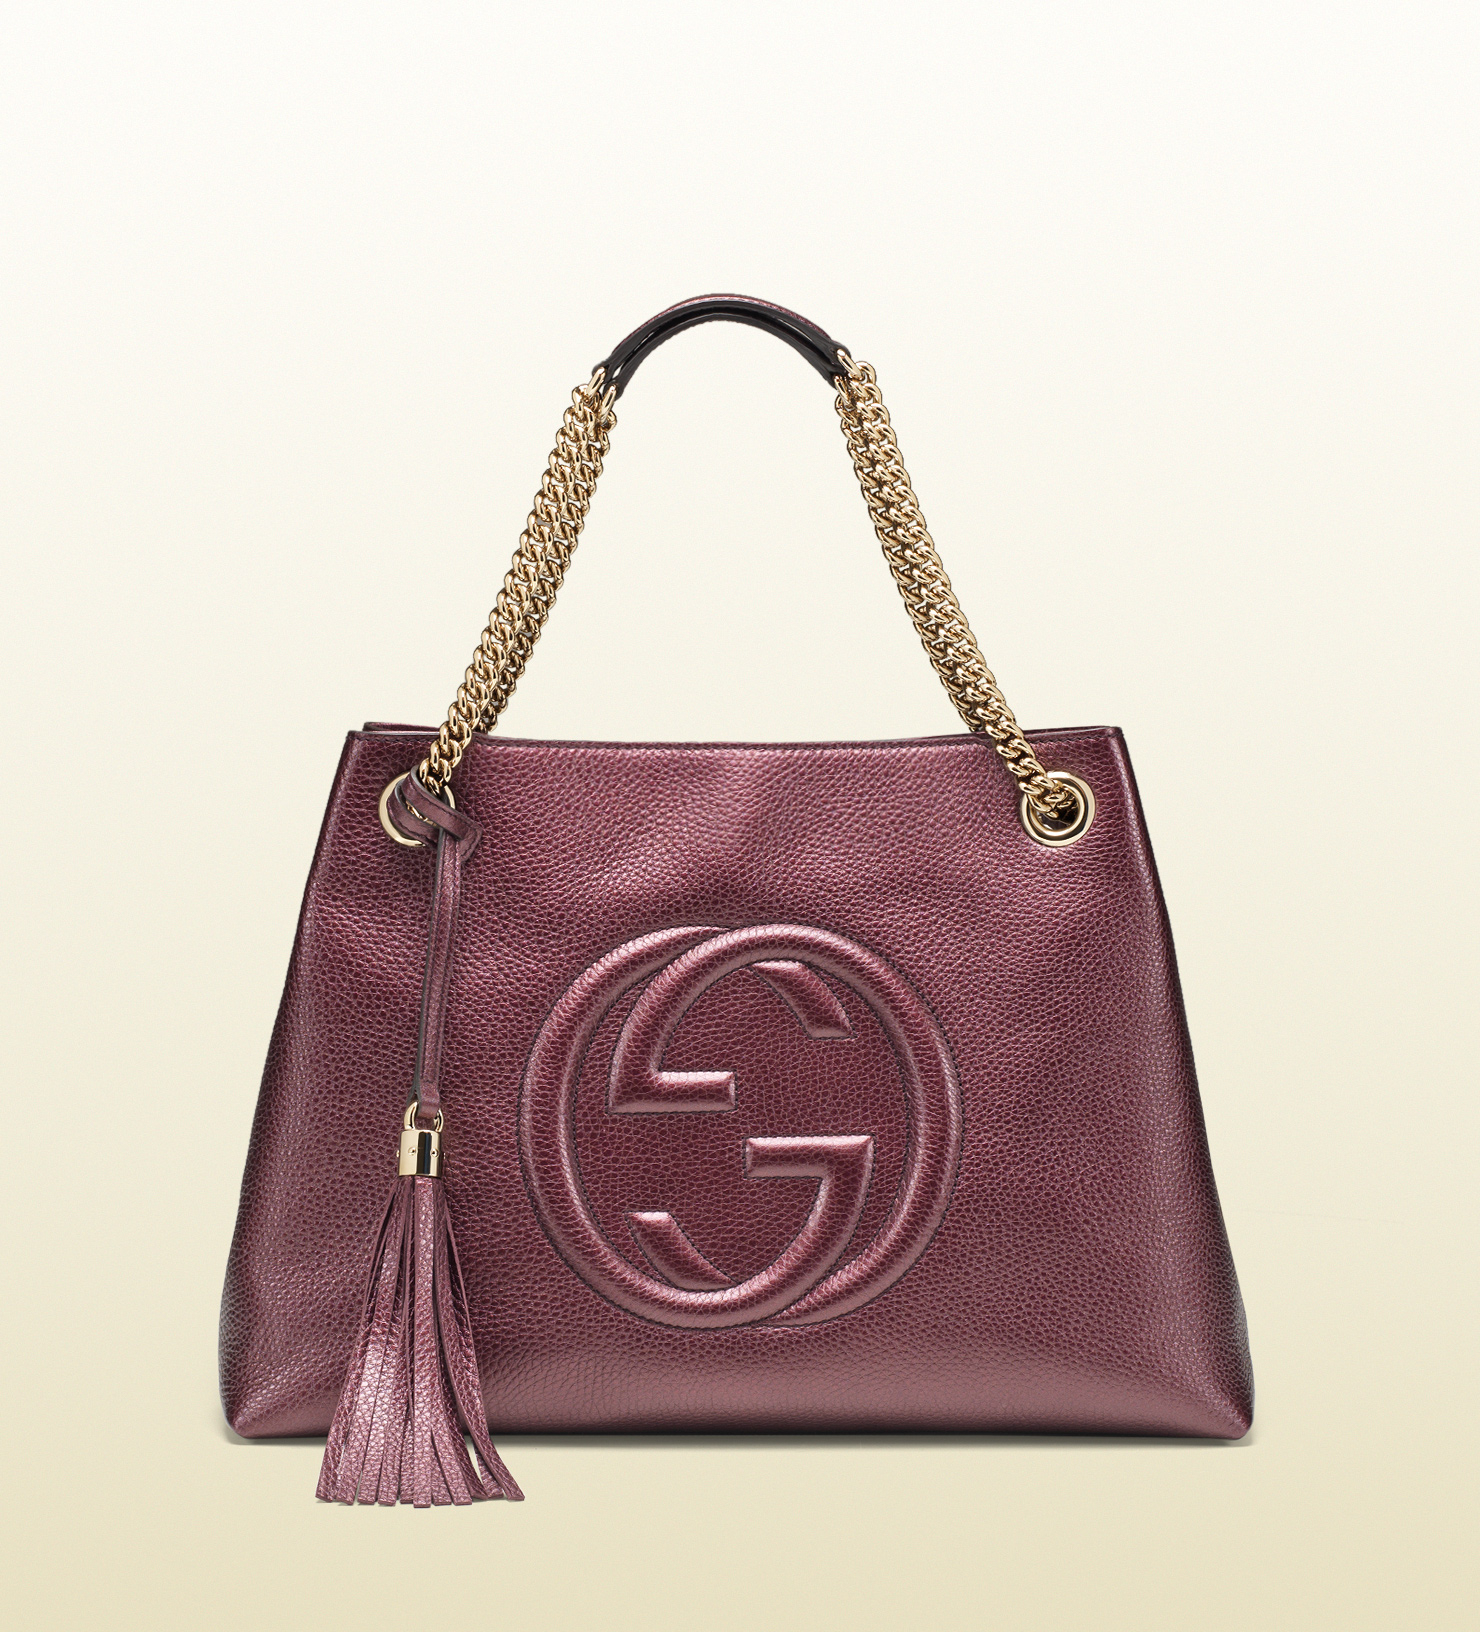 Gucci Soho Metallic Leather Shoulder Bag in Purple | Lyst